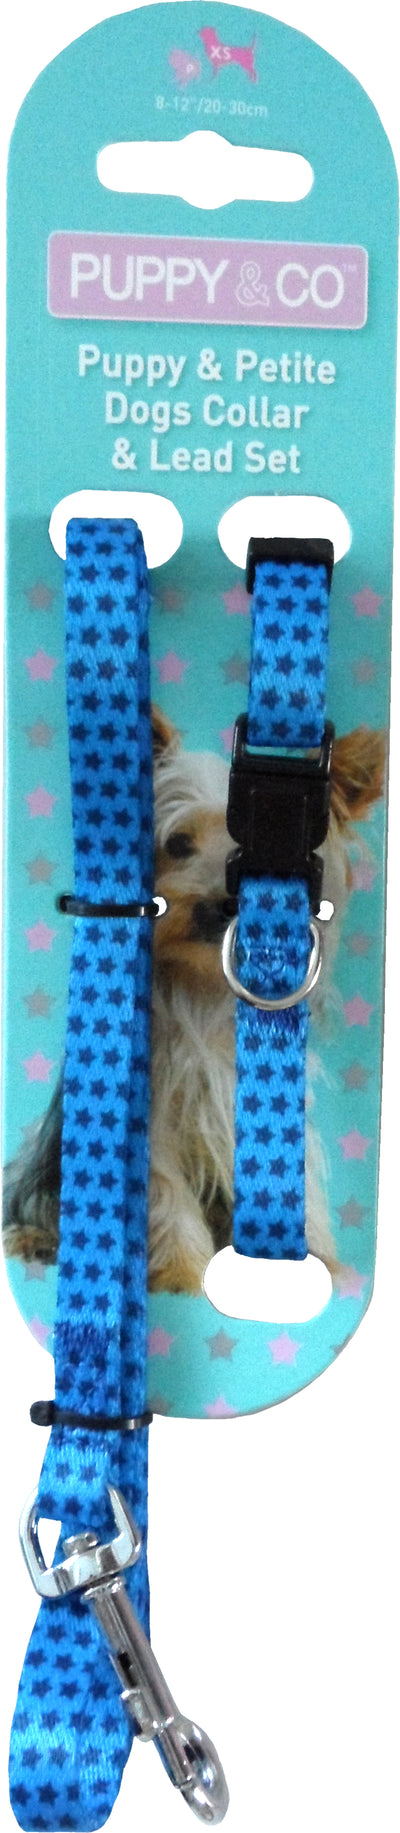 Pup & Co Puppy & Petite Dog Collar & Lead Set